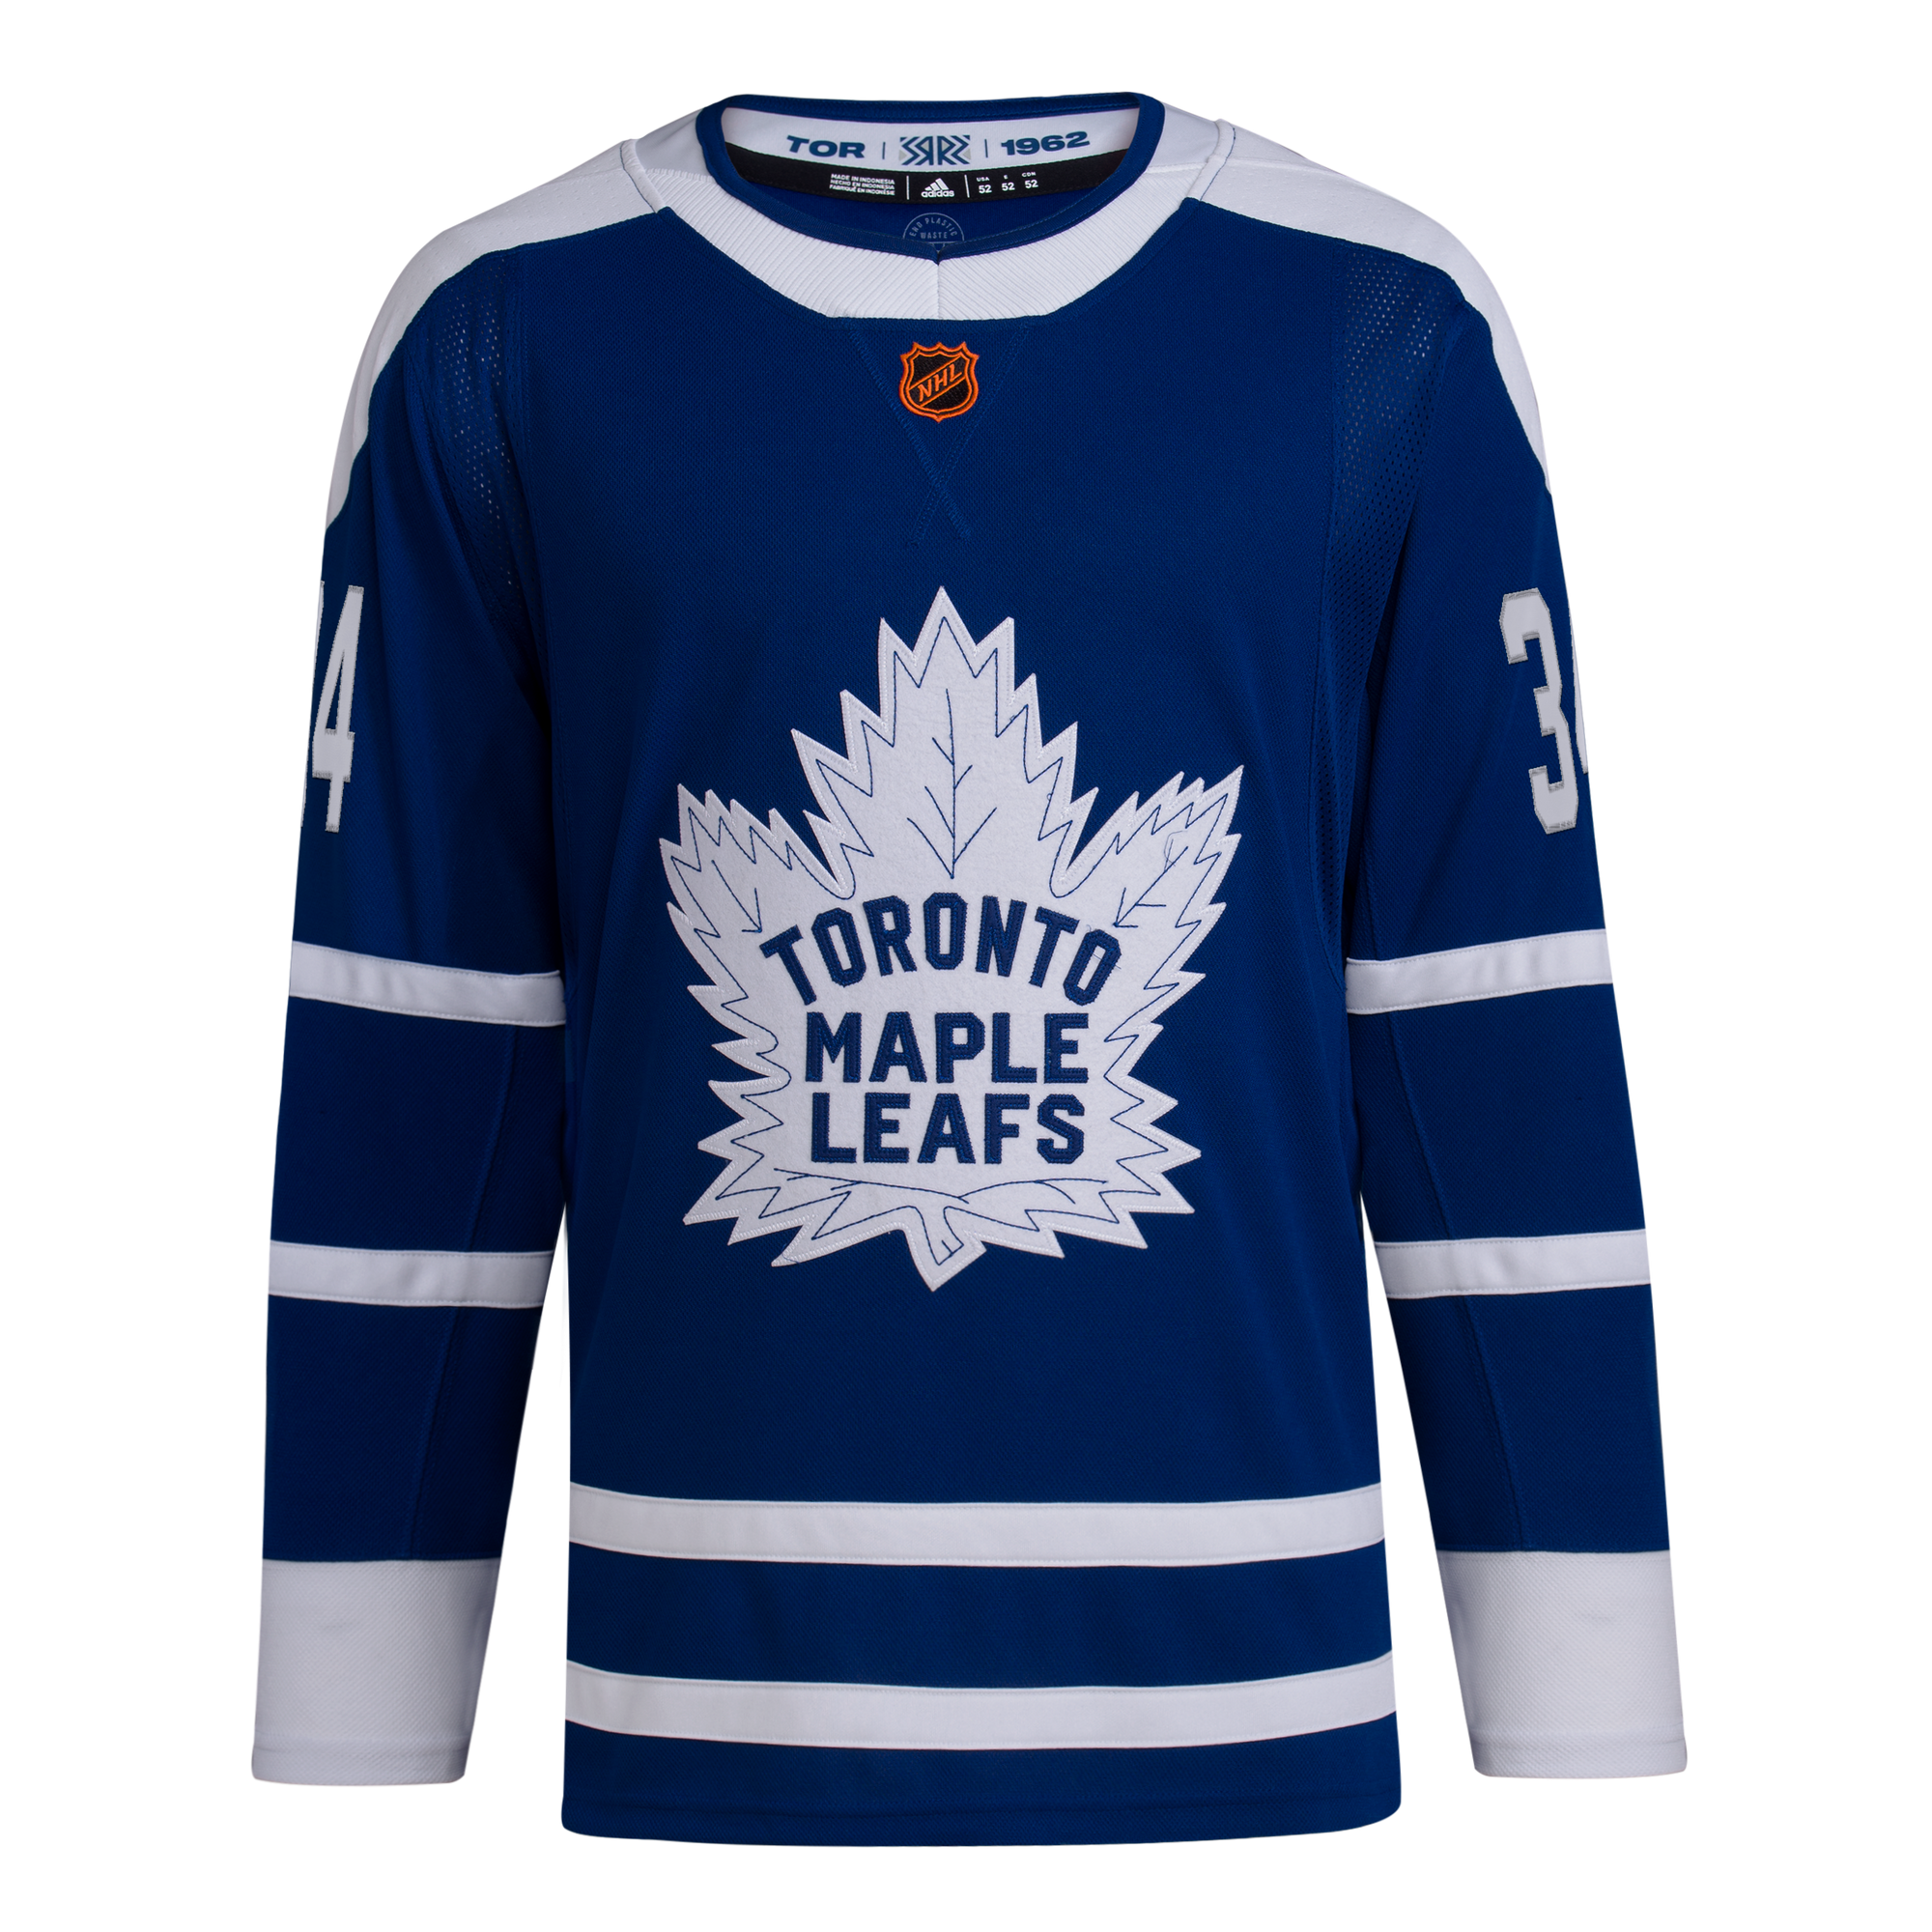 Youth Toronto Maple Leafs Auston Matthews #34 Alternate Premier